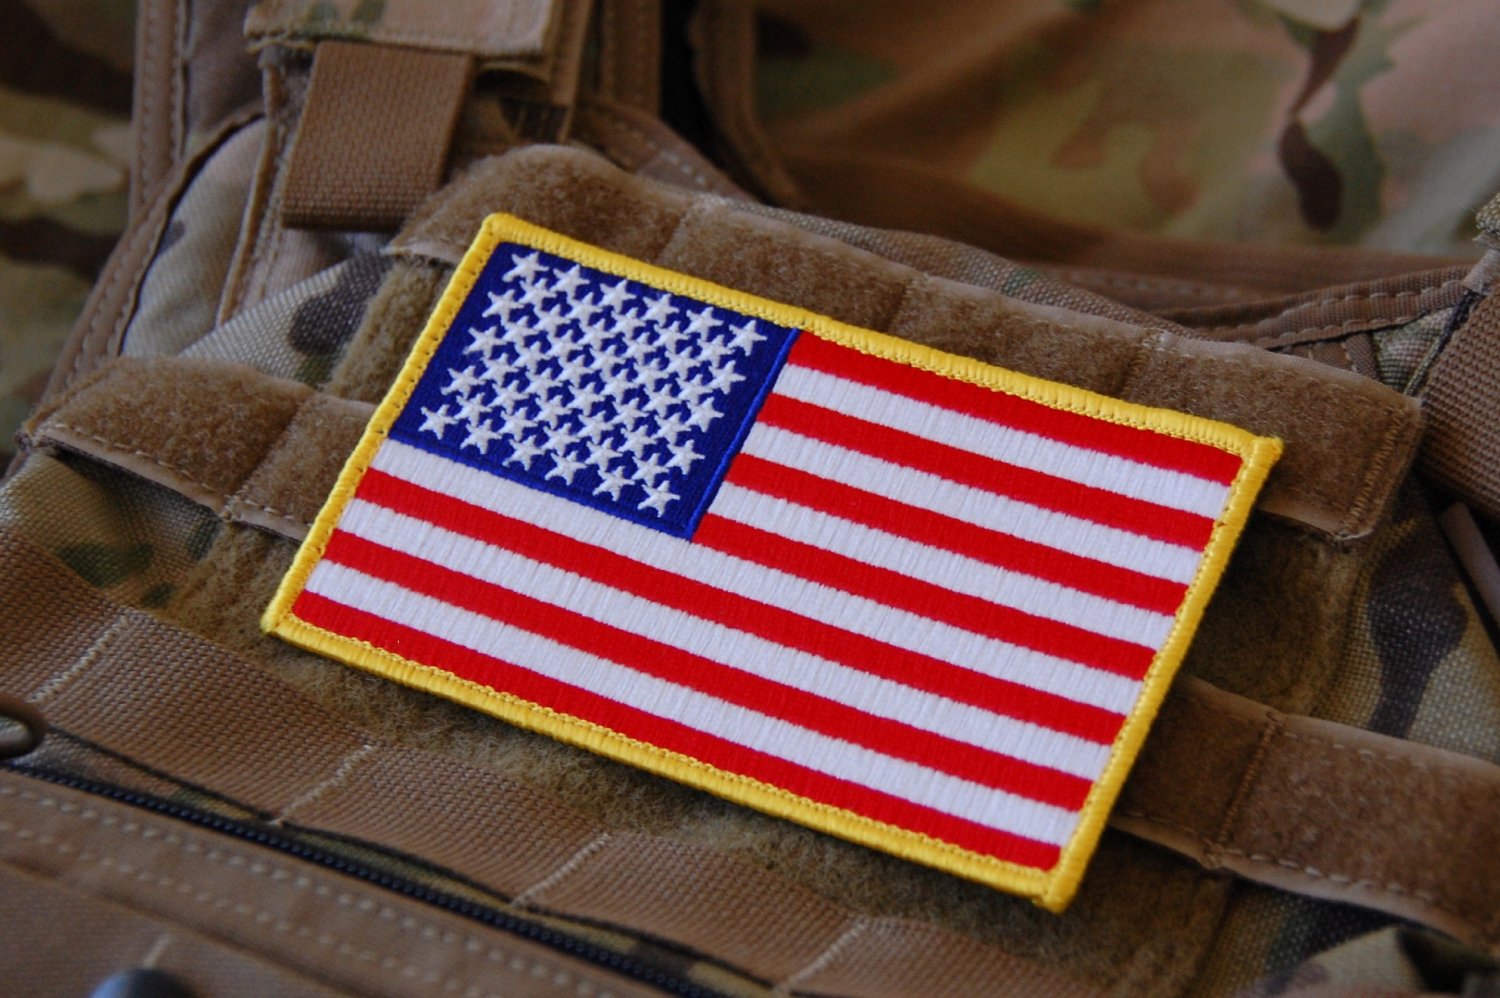 US Flag Patch | Velcro, 2 x 3.25